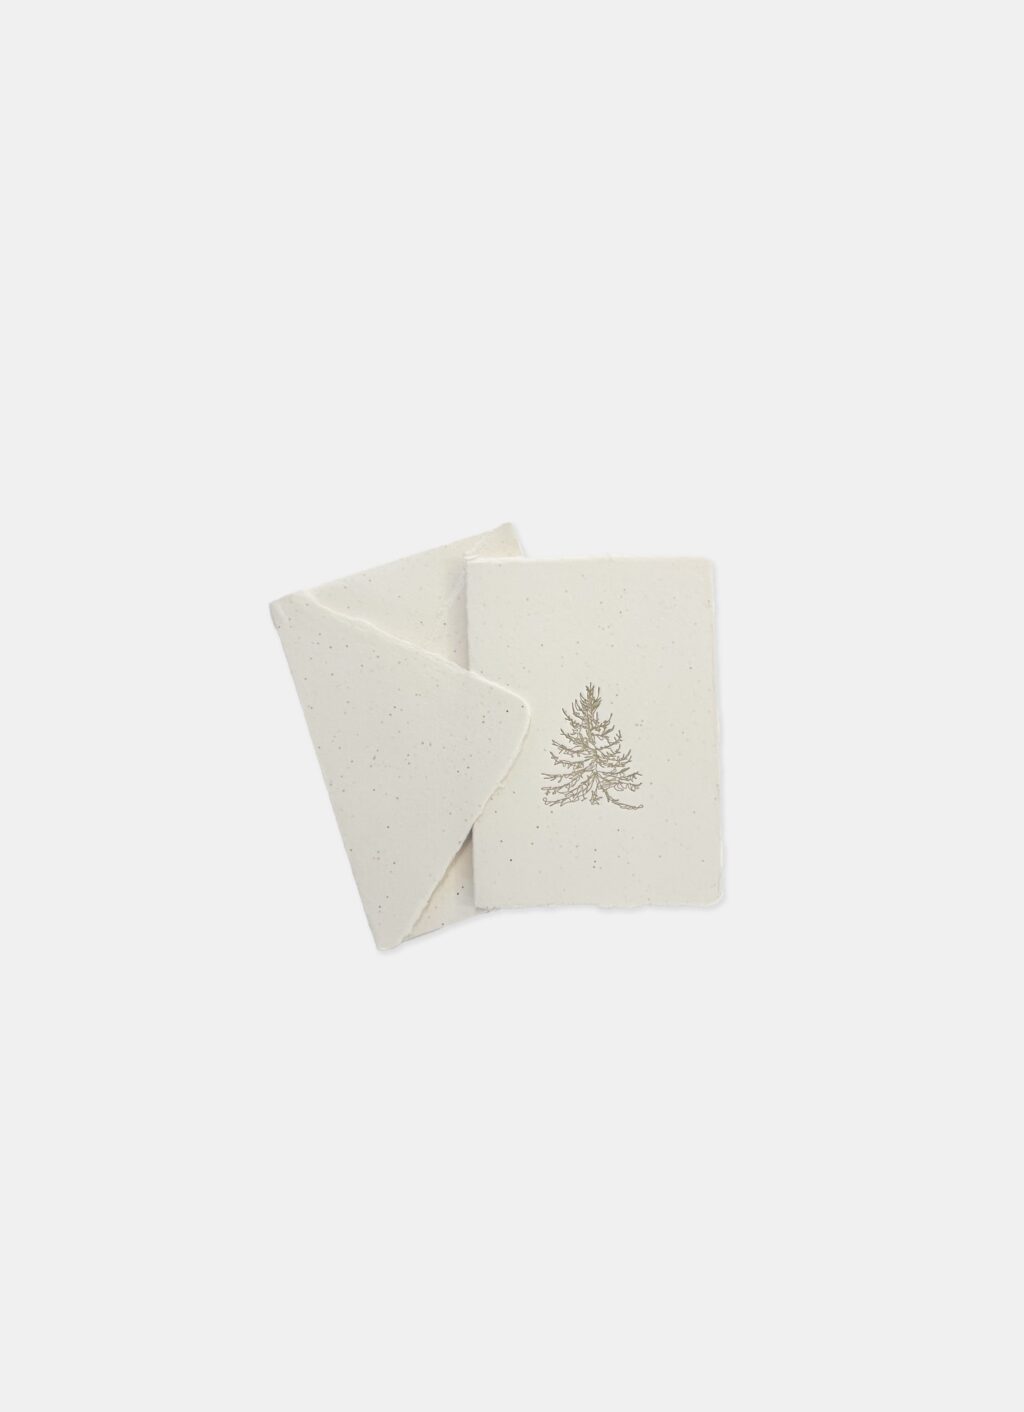 Eliv Rosenkranz - Handmade White Paper with Gold Glitter - Folded Letterpress Card with Envelope - Christmas Tree